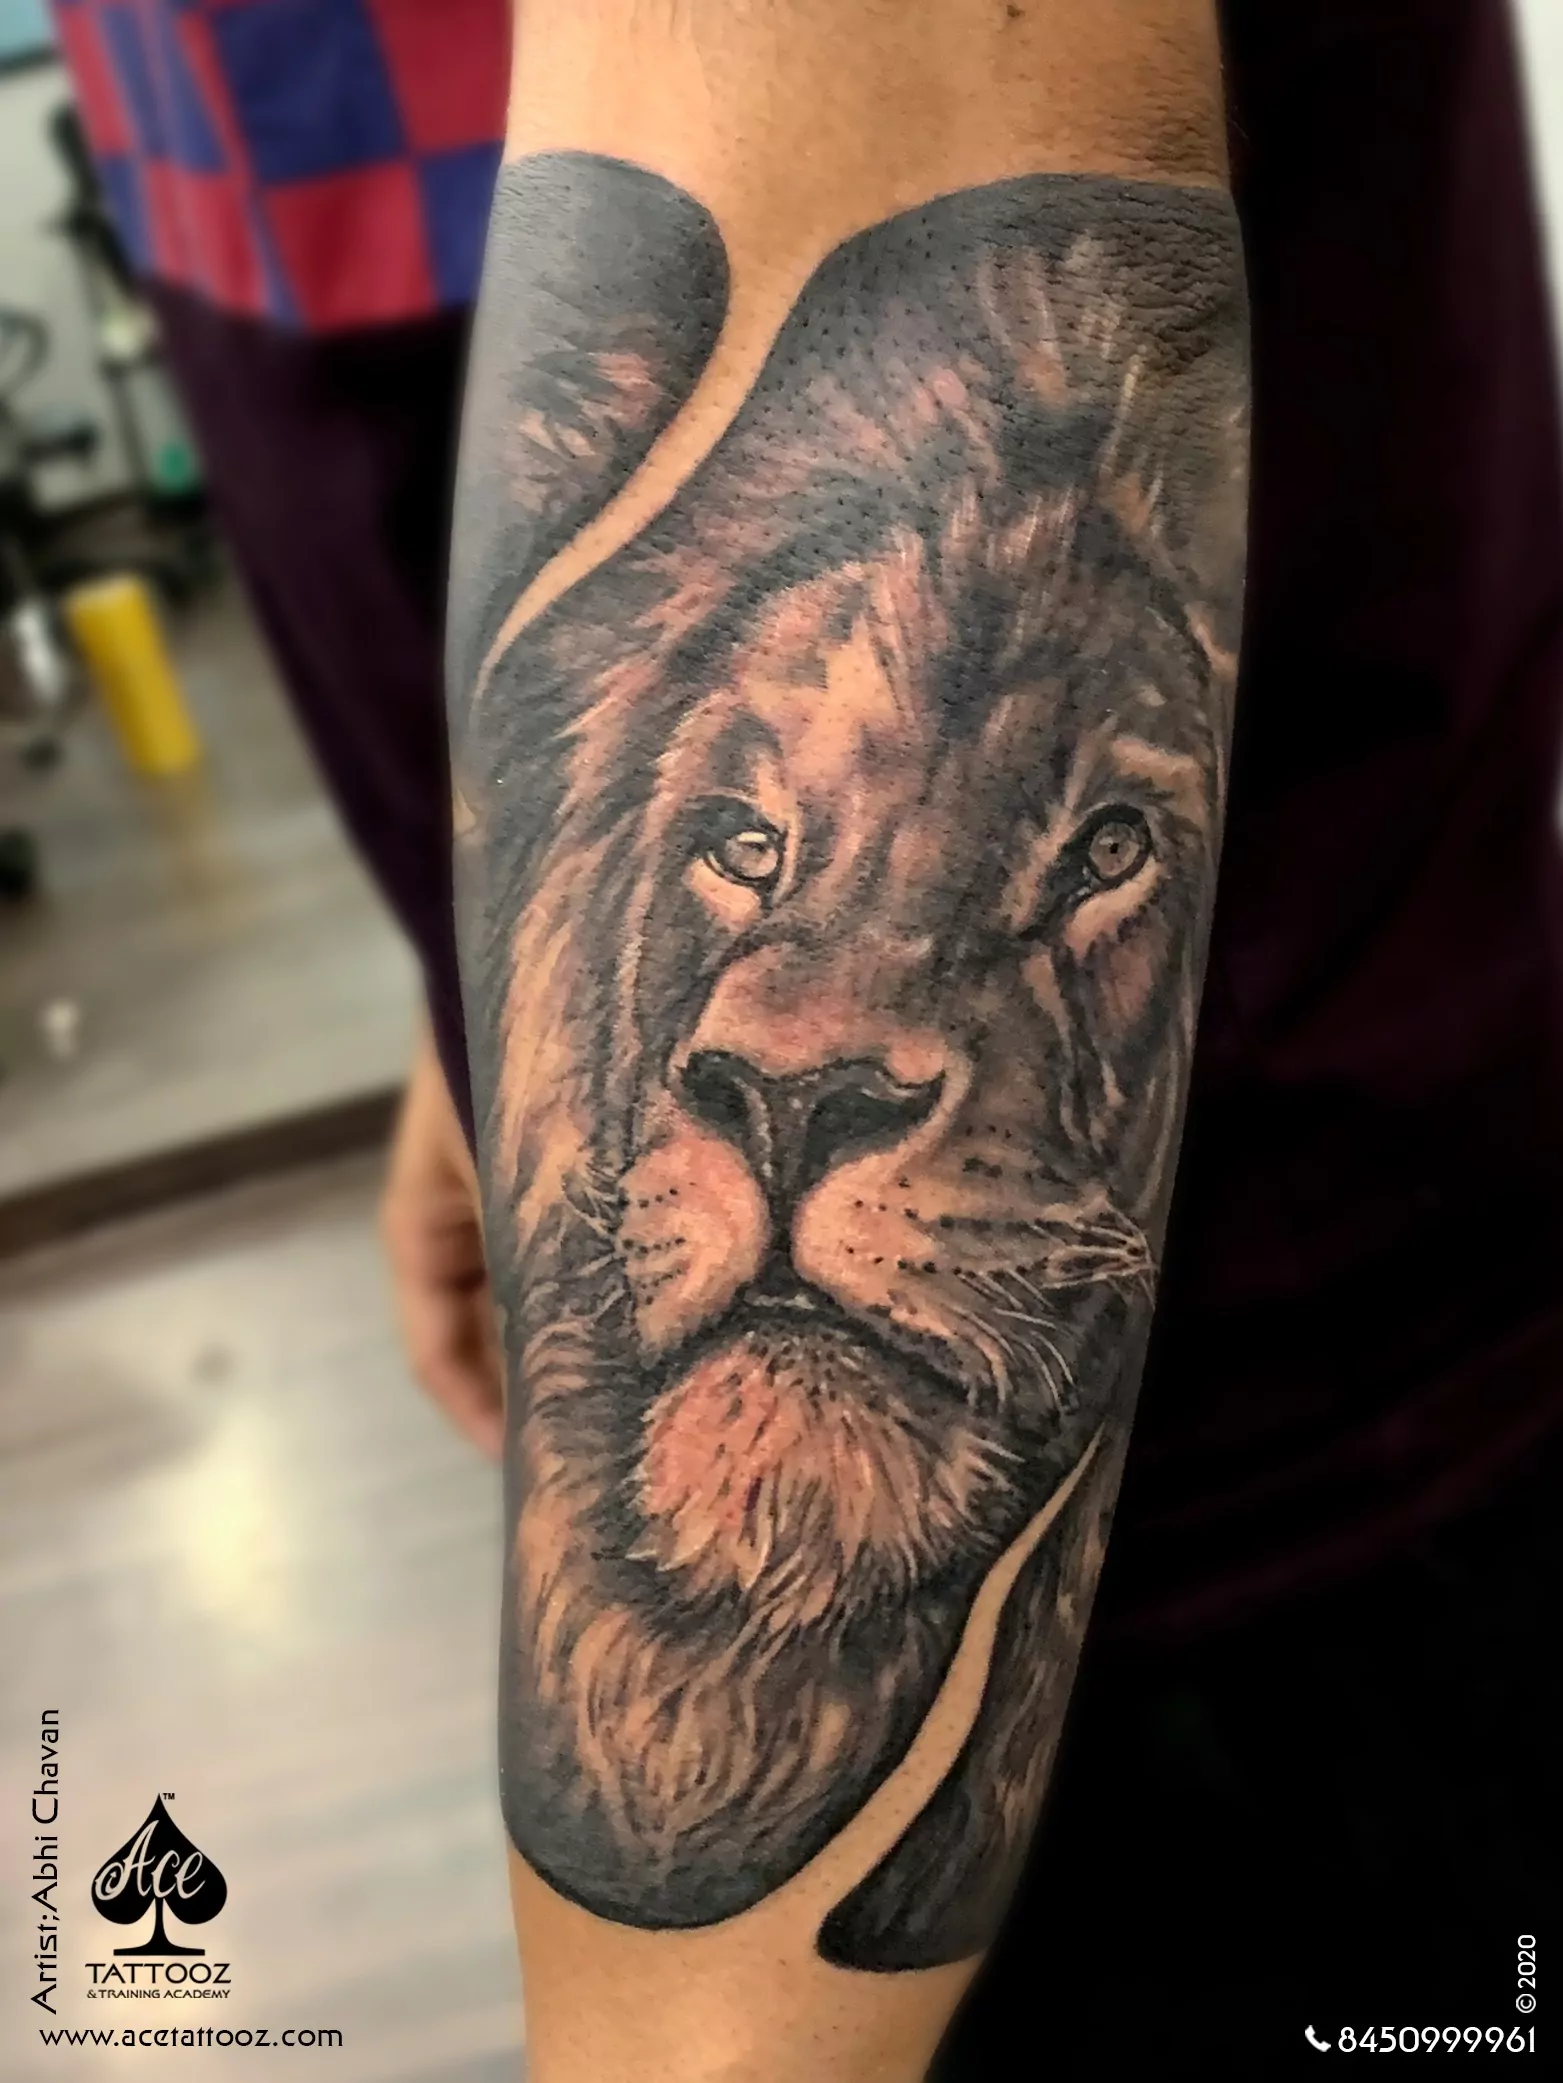 Black & White Lion Tattoo - Ace Tattooz